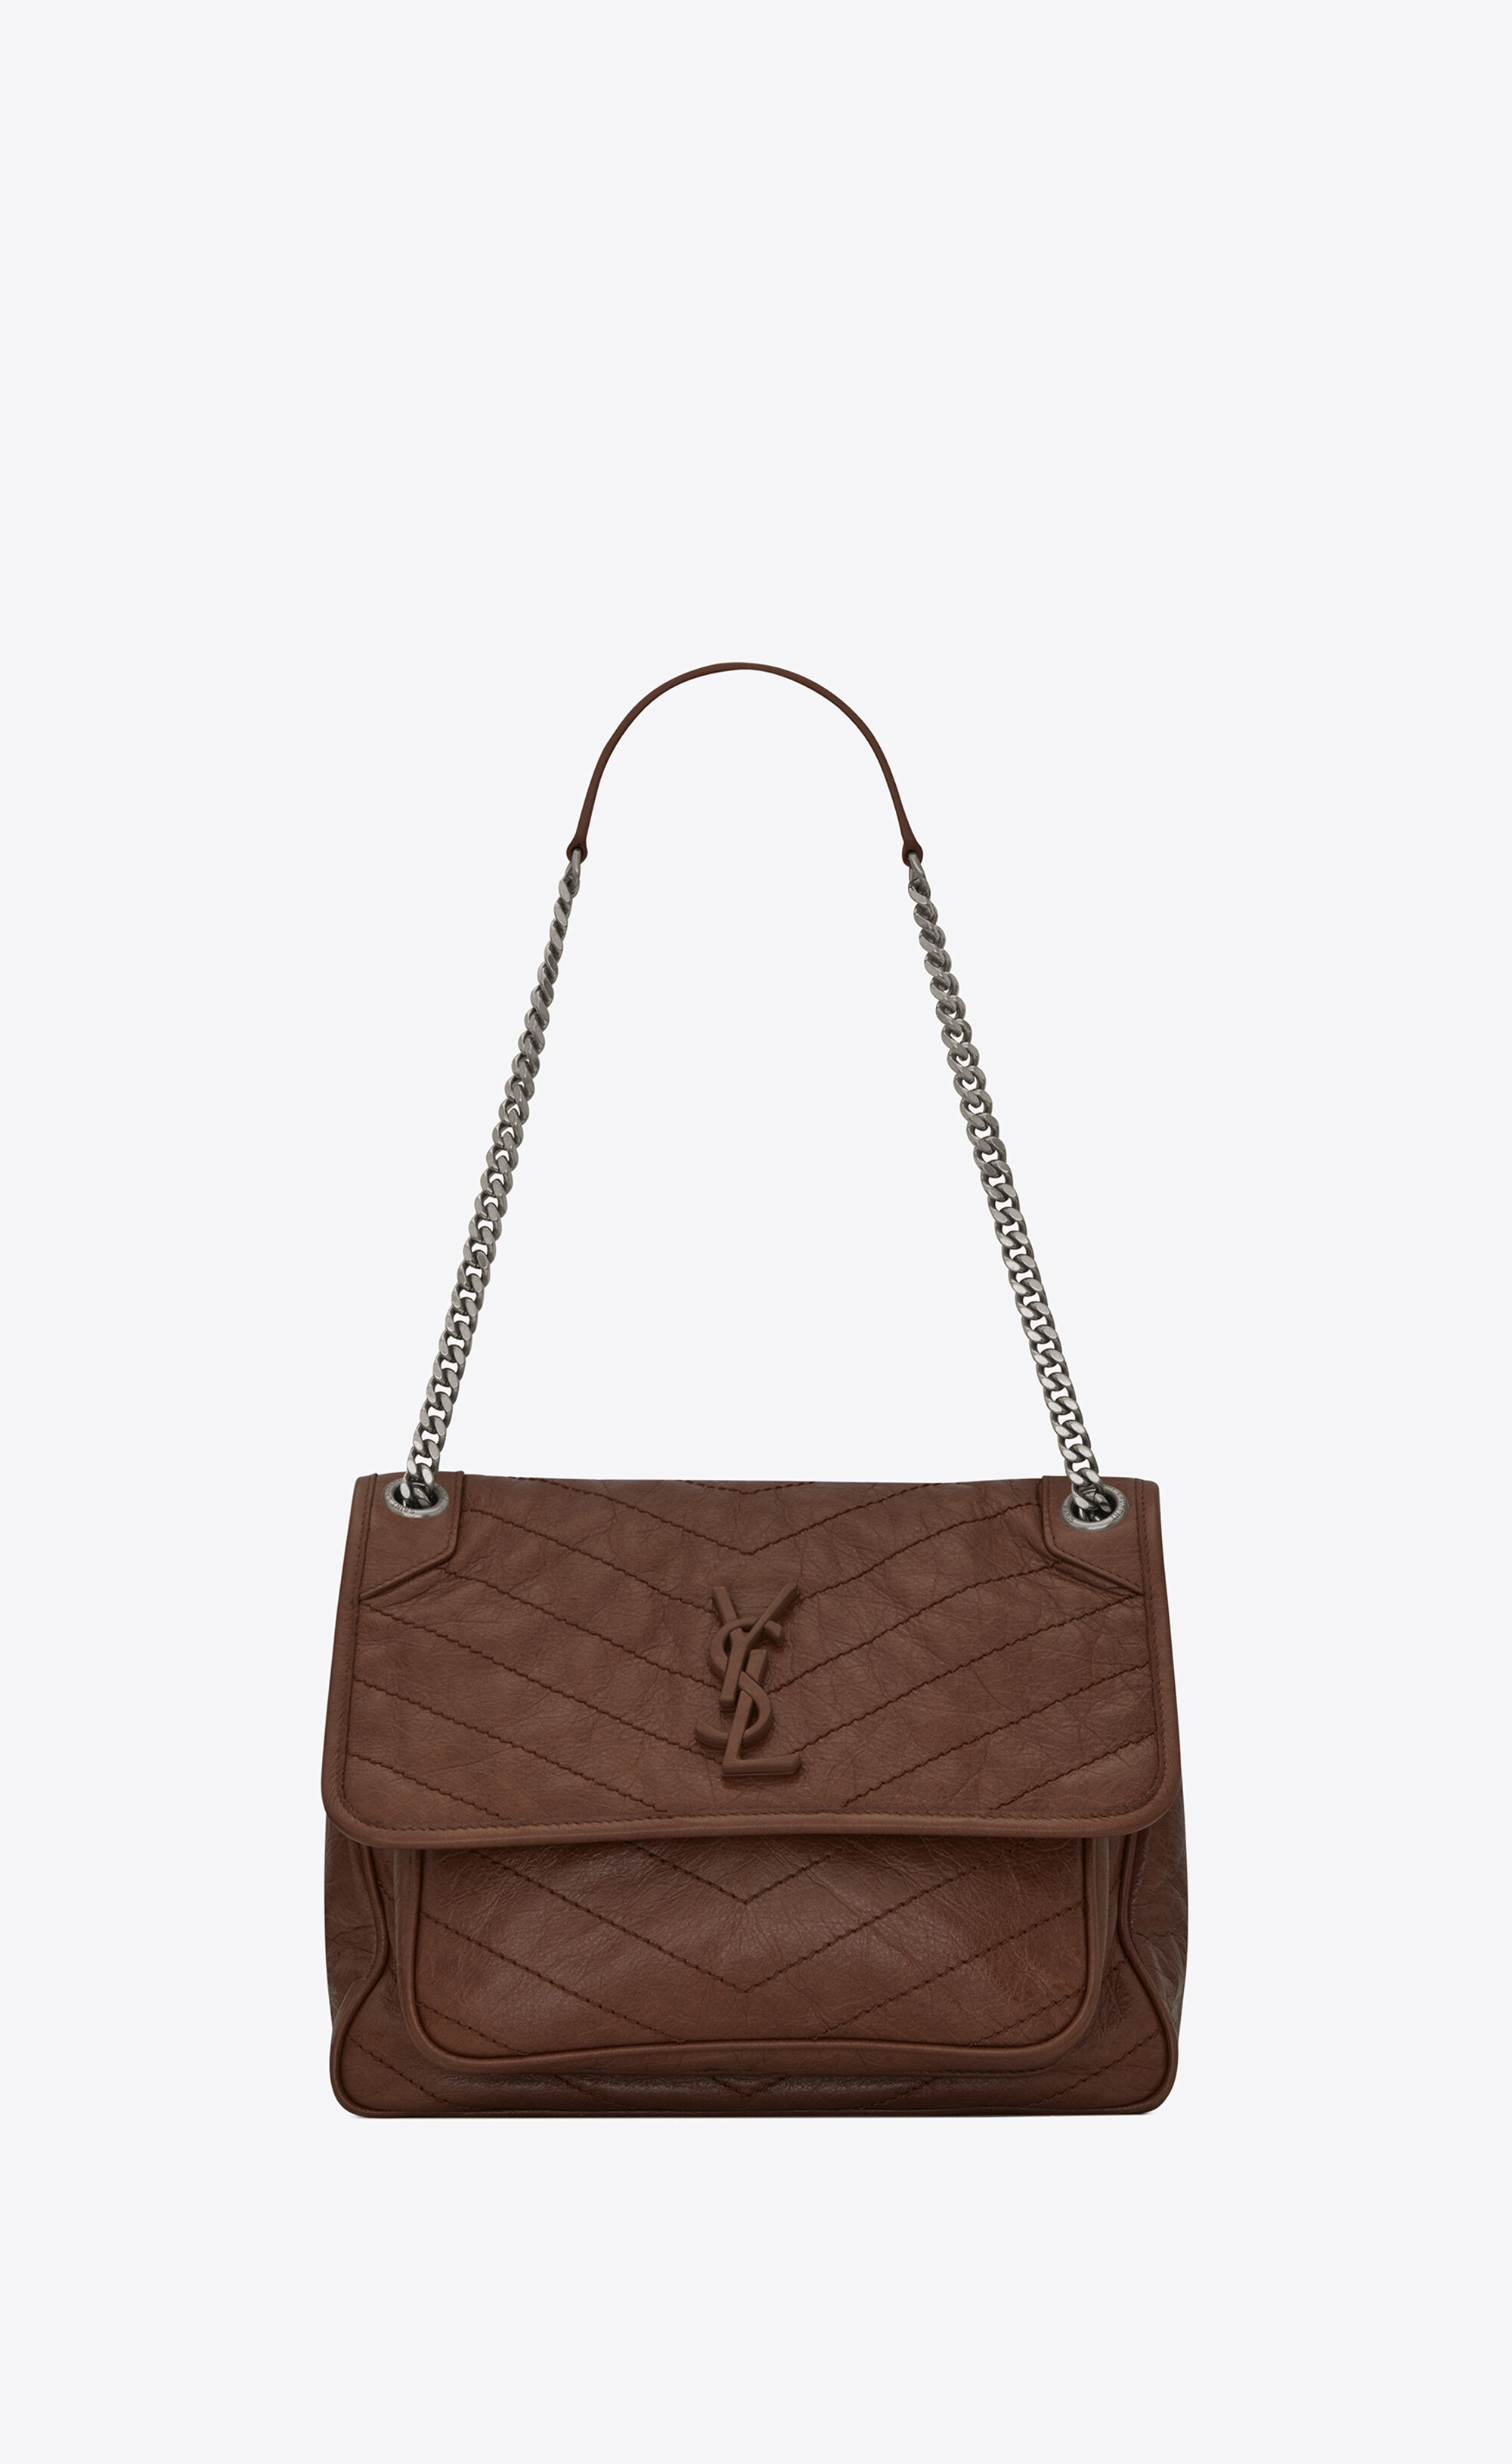 Retro Leather Women Shoulder Bag Animal Pattern Tote Travel Handbag Purse 2020